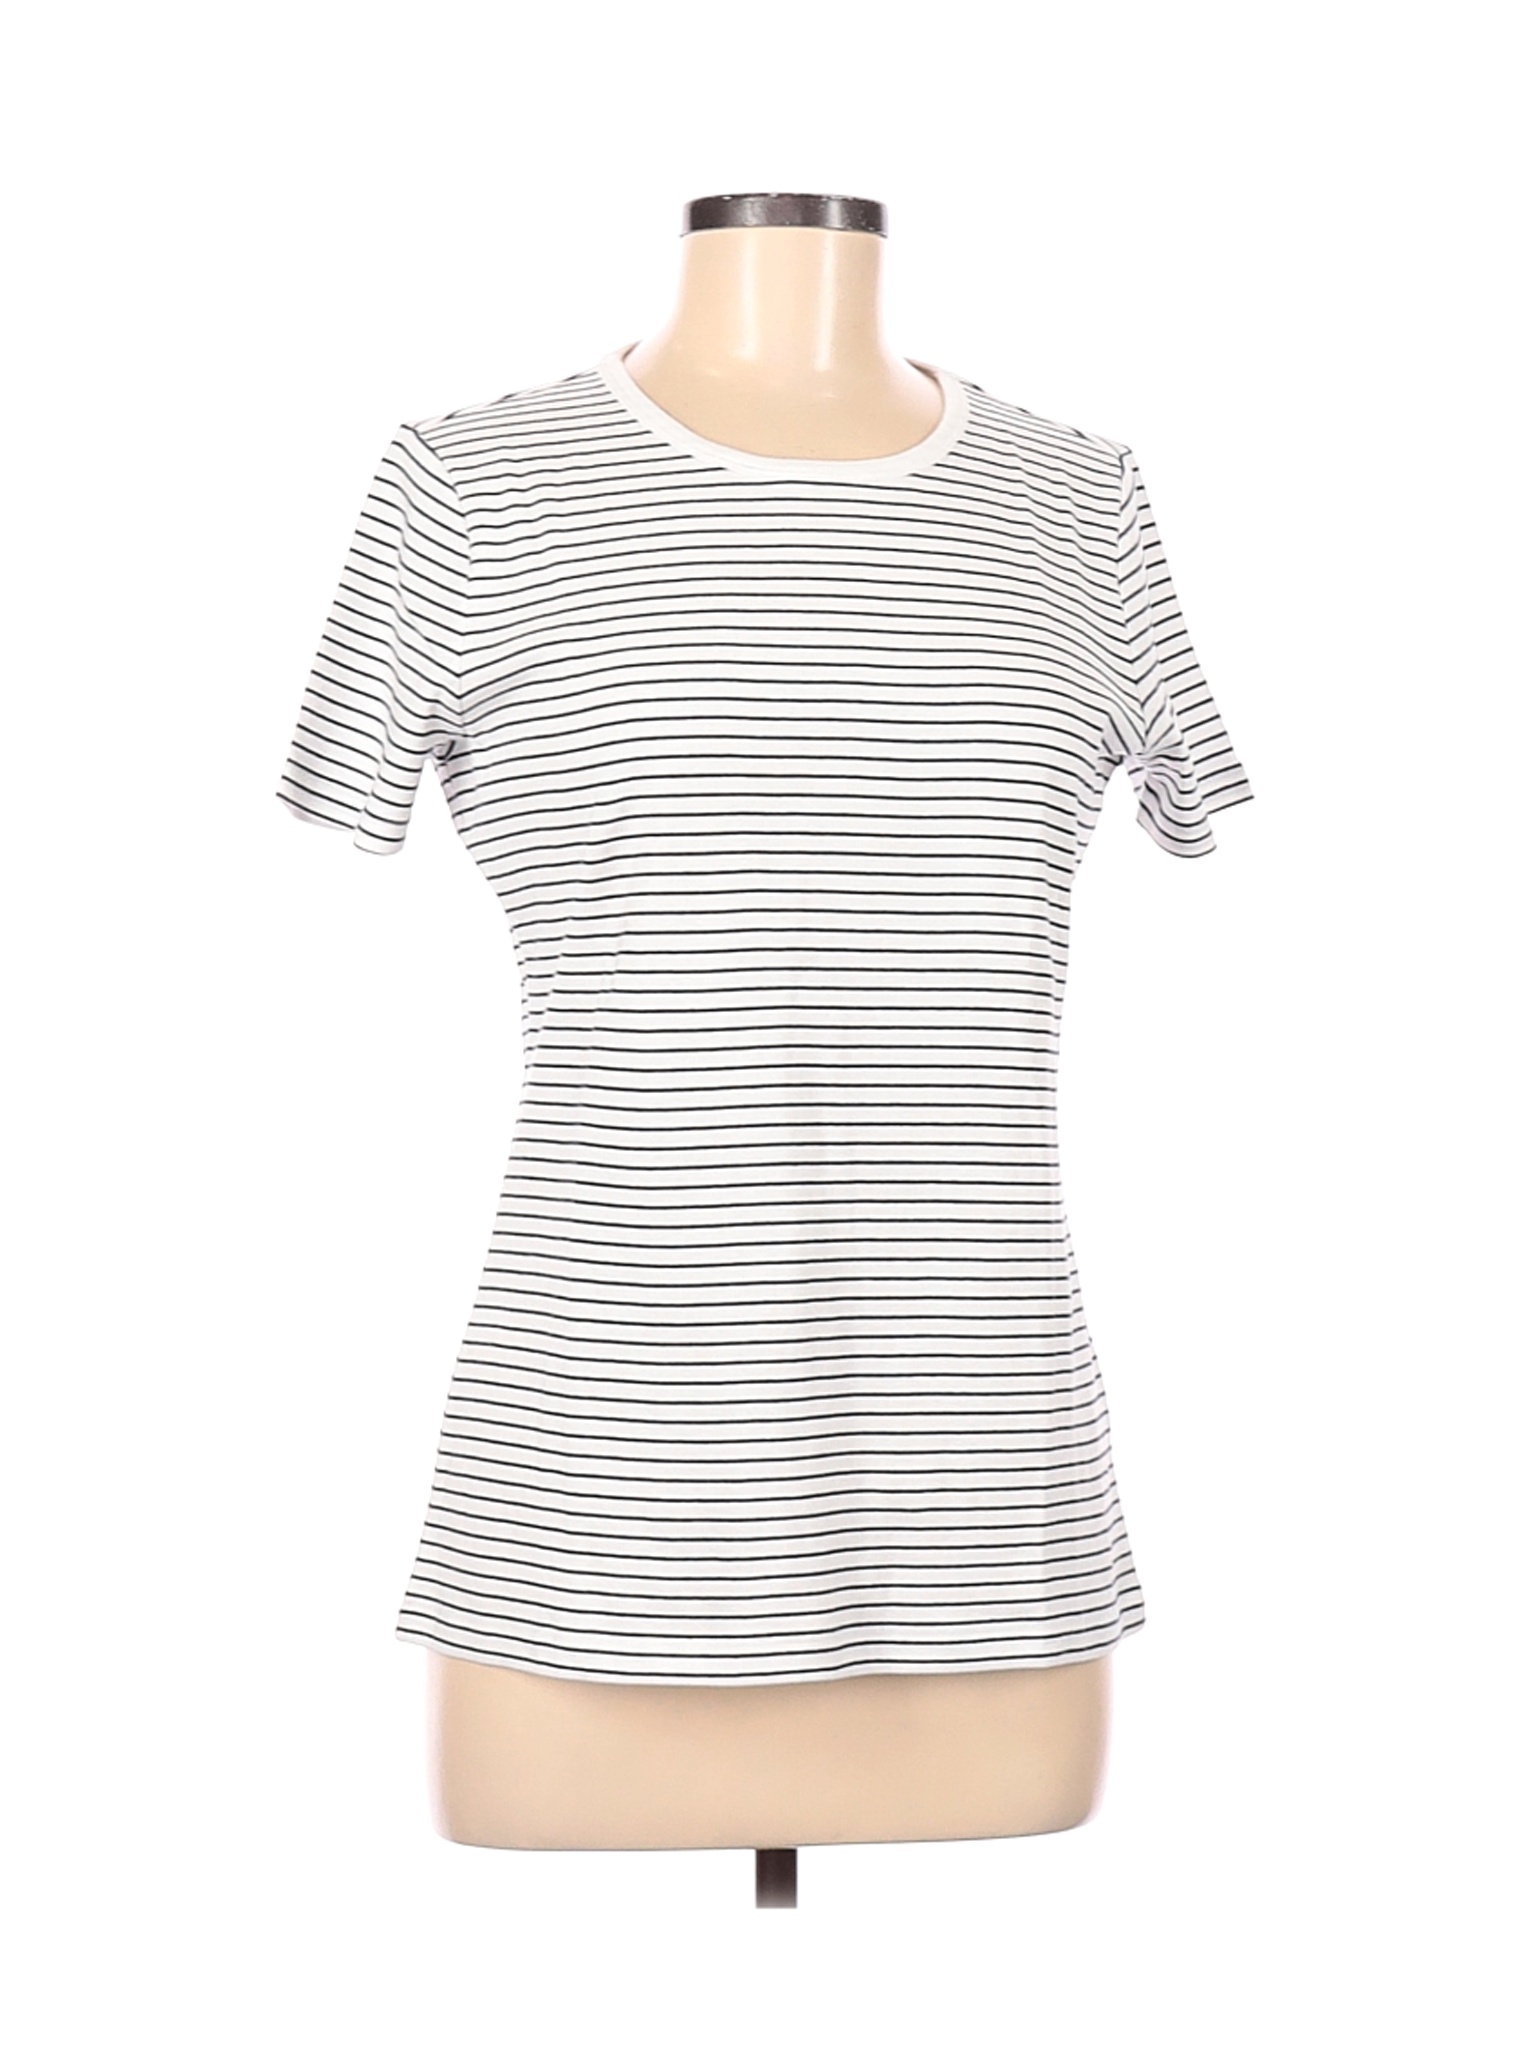 Lands' End Women White Short Sleeve T-Shirt M | eBay